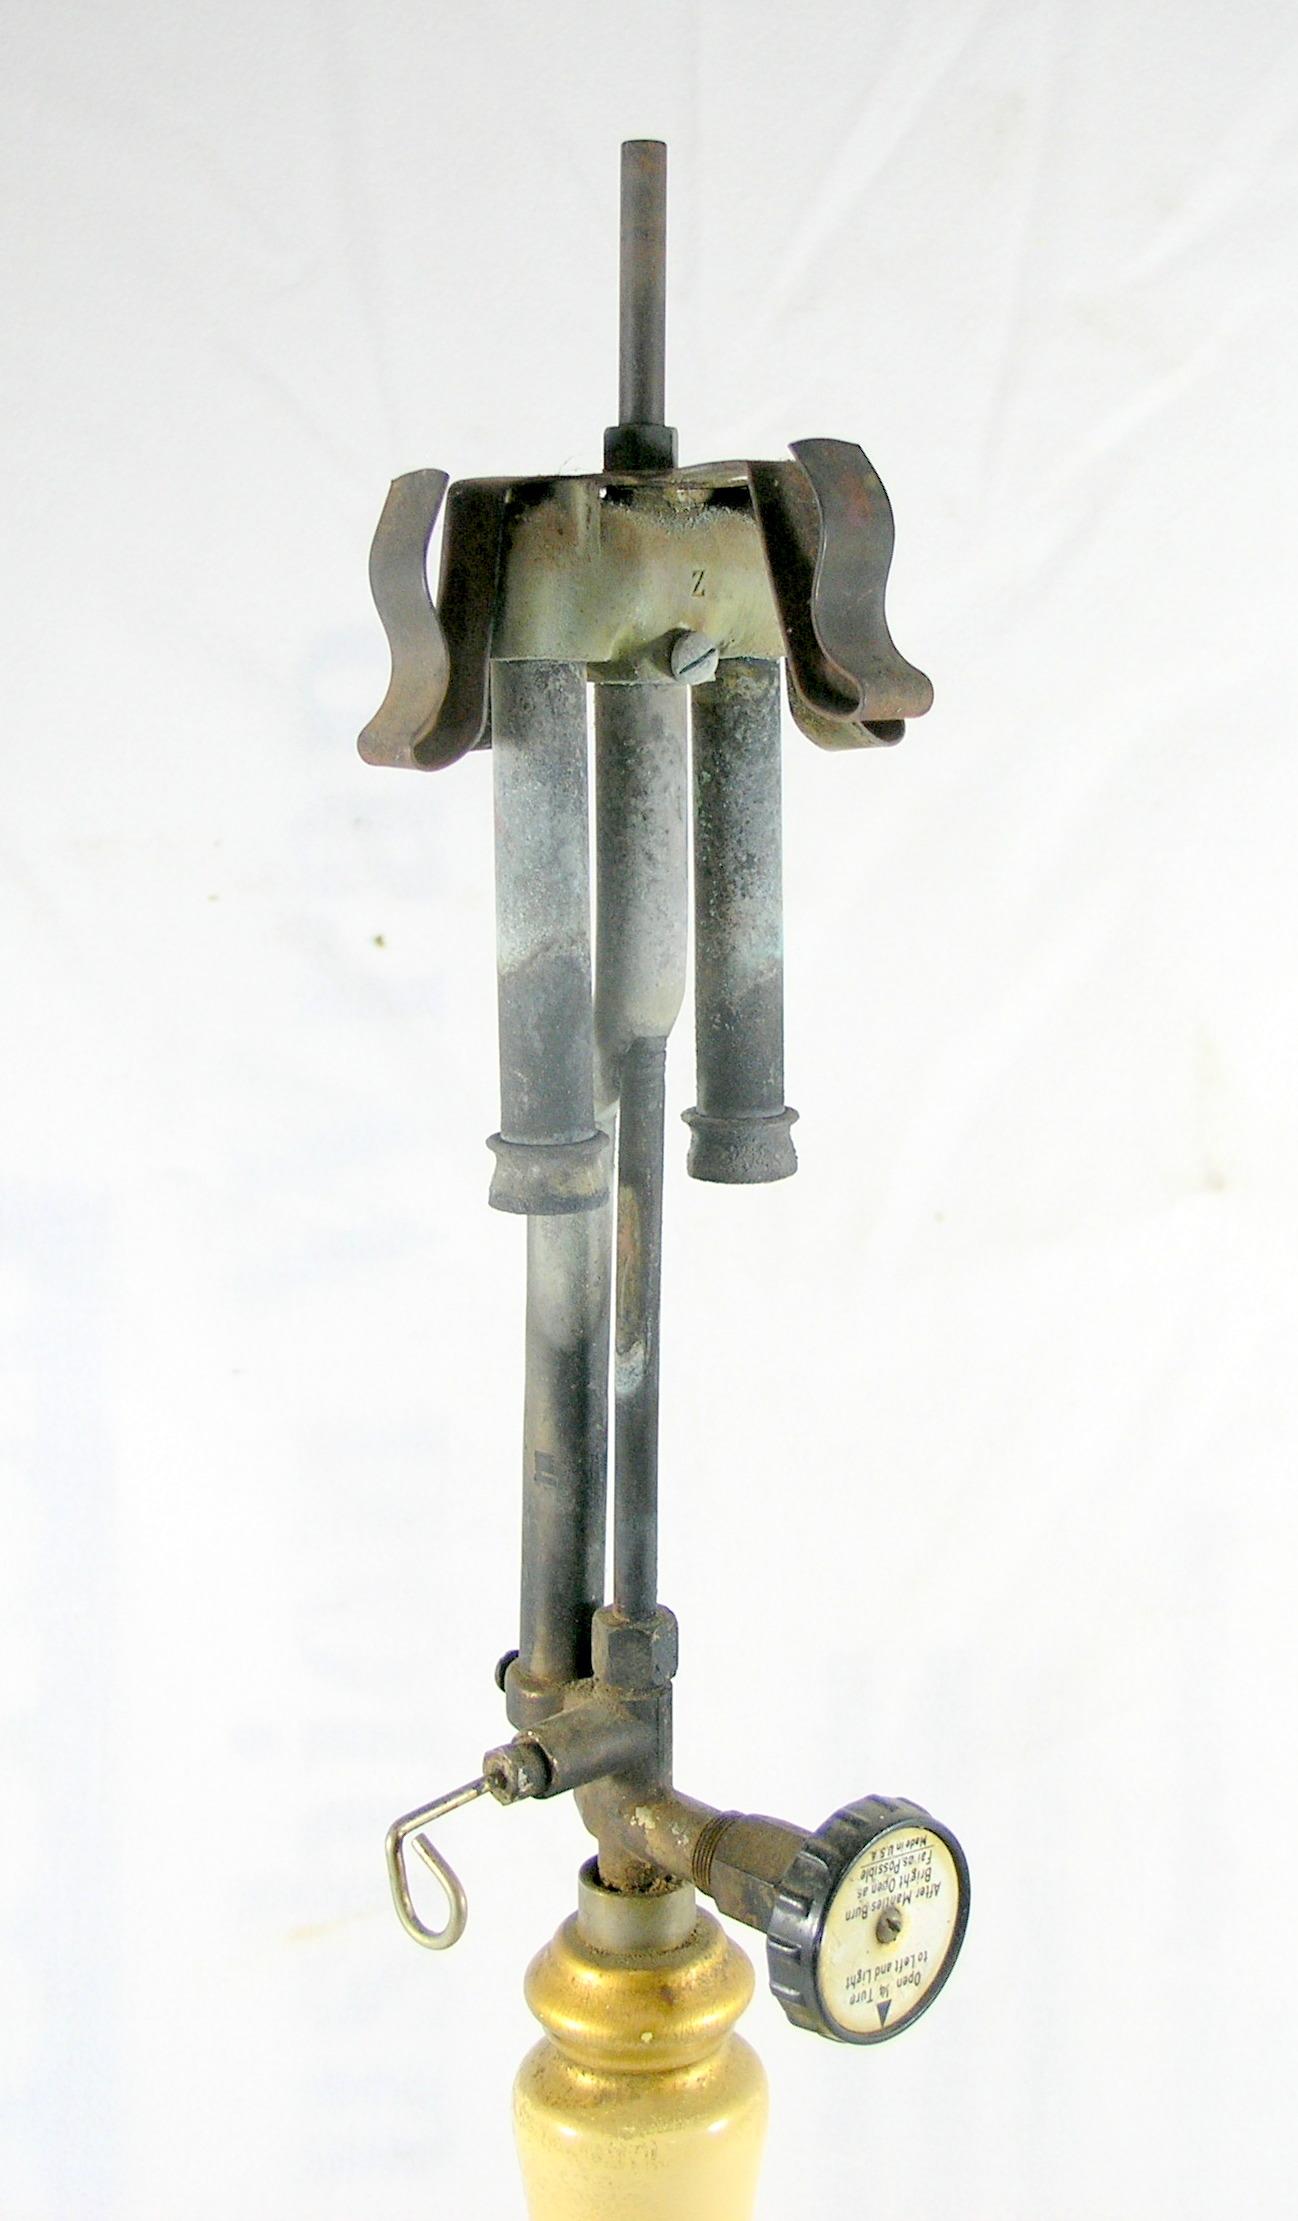 Vintage Coleman Instant Lighting Number 143 Kerosene Brass Lantern. Shade Is